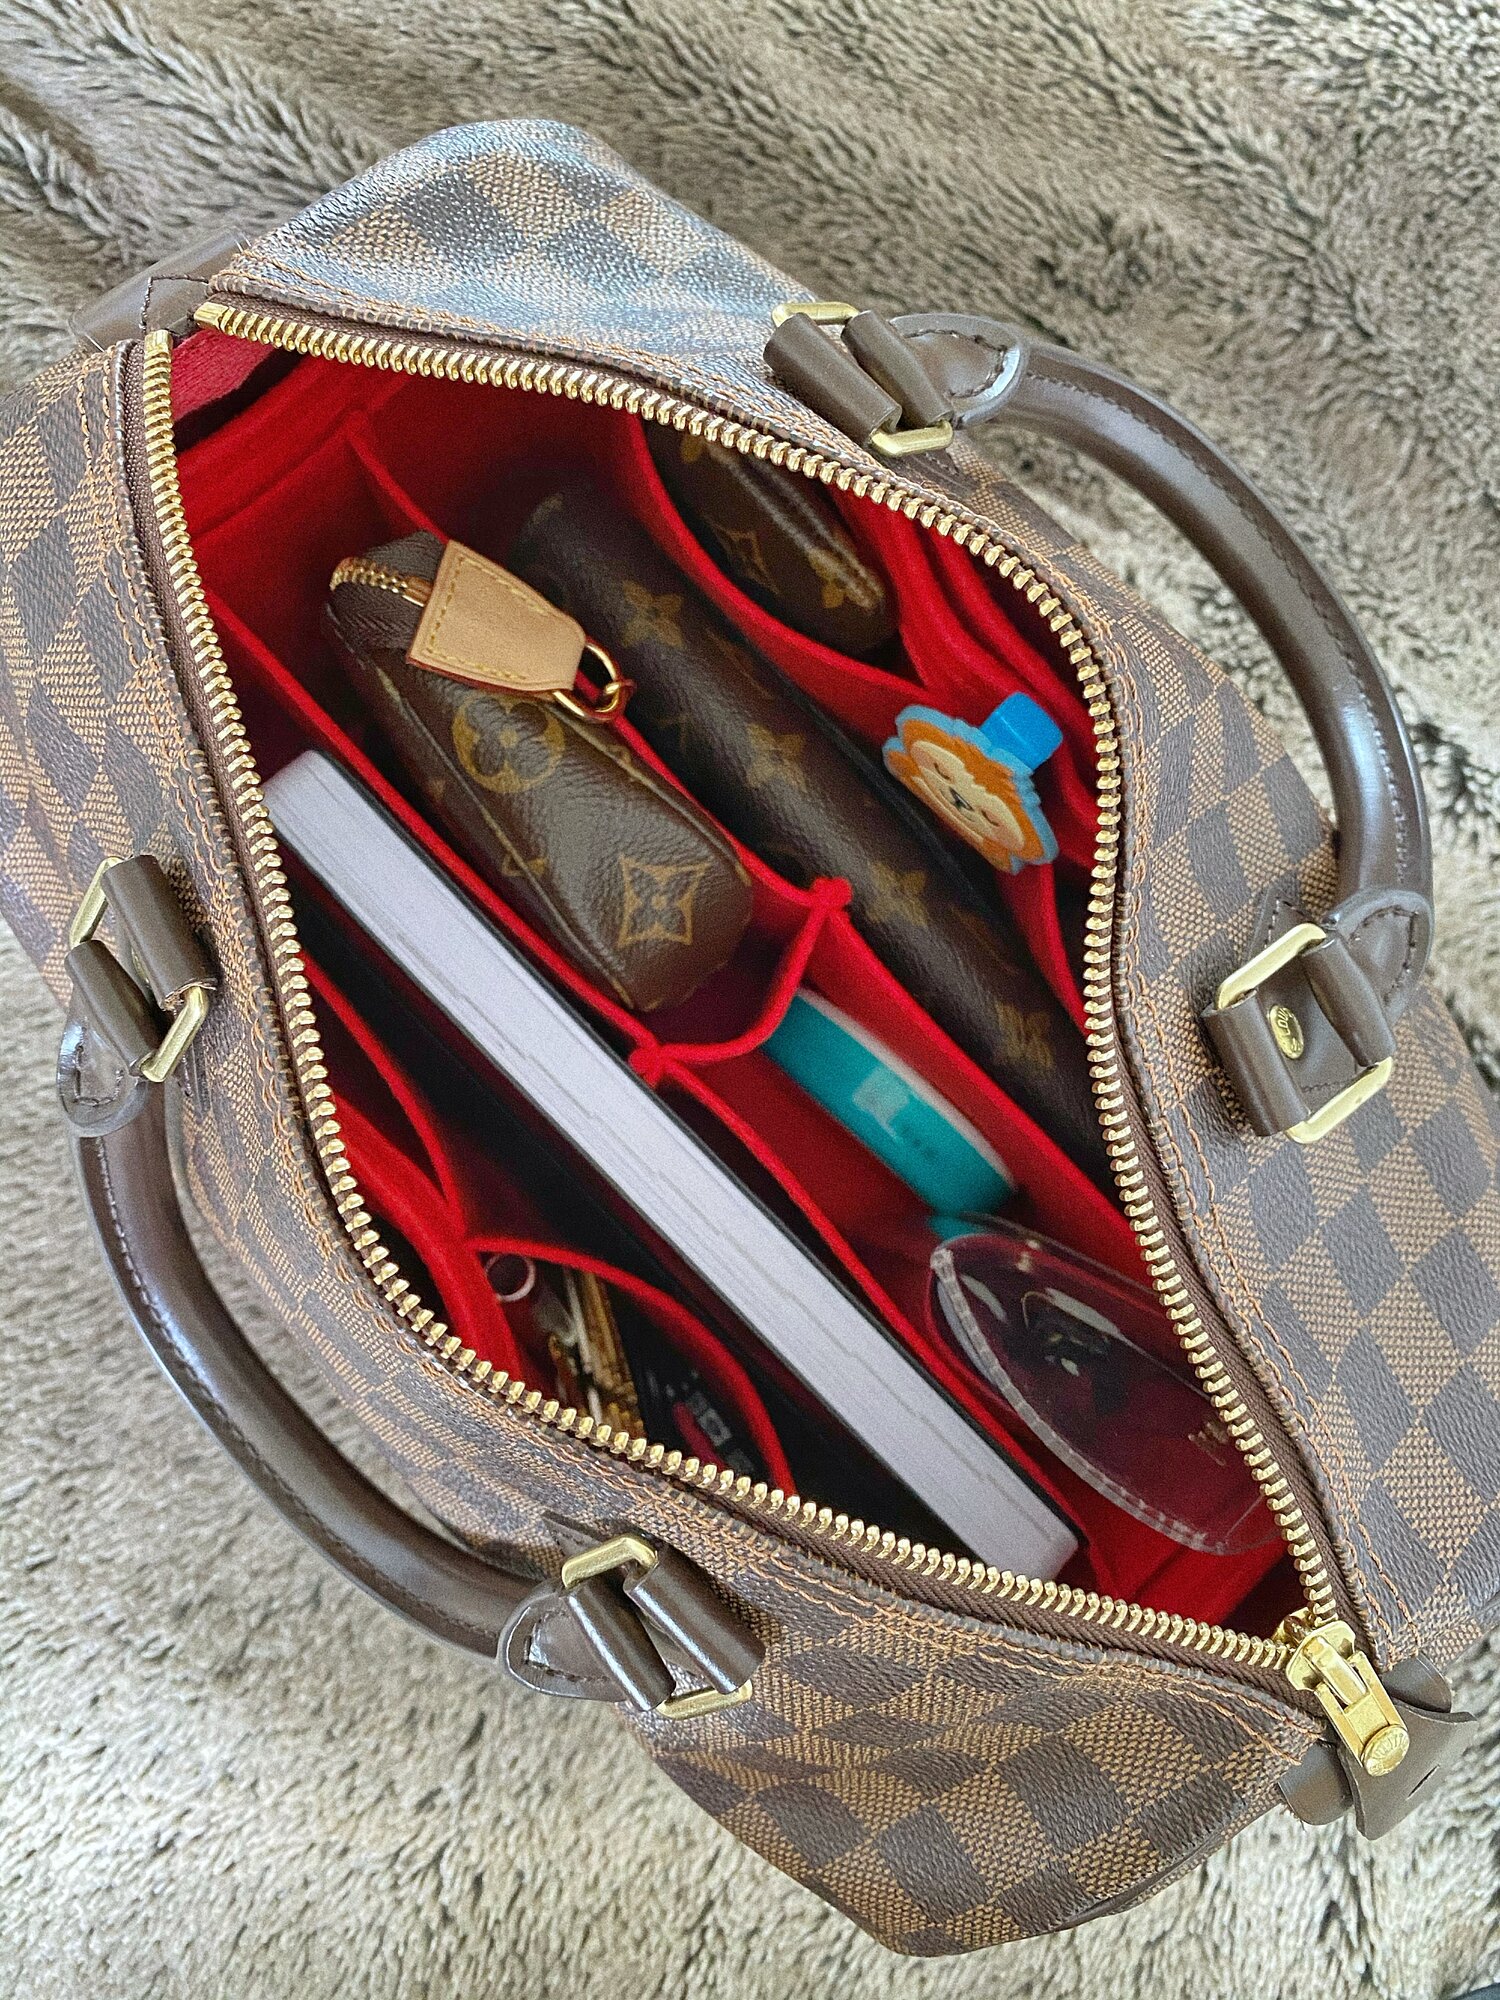 samorga bag organiser speedy 25, Luxury, Bags & Wallets on Carousell